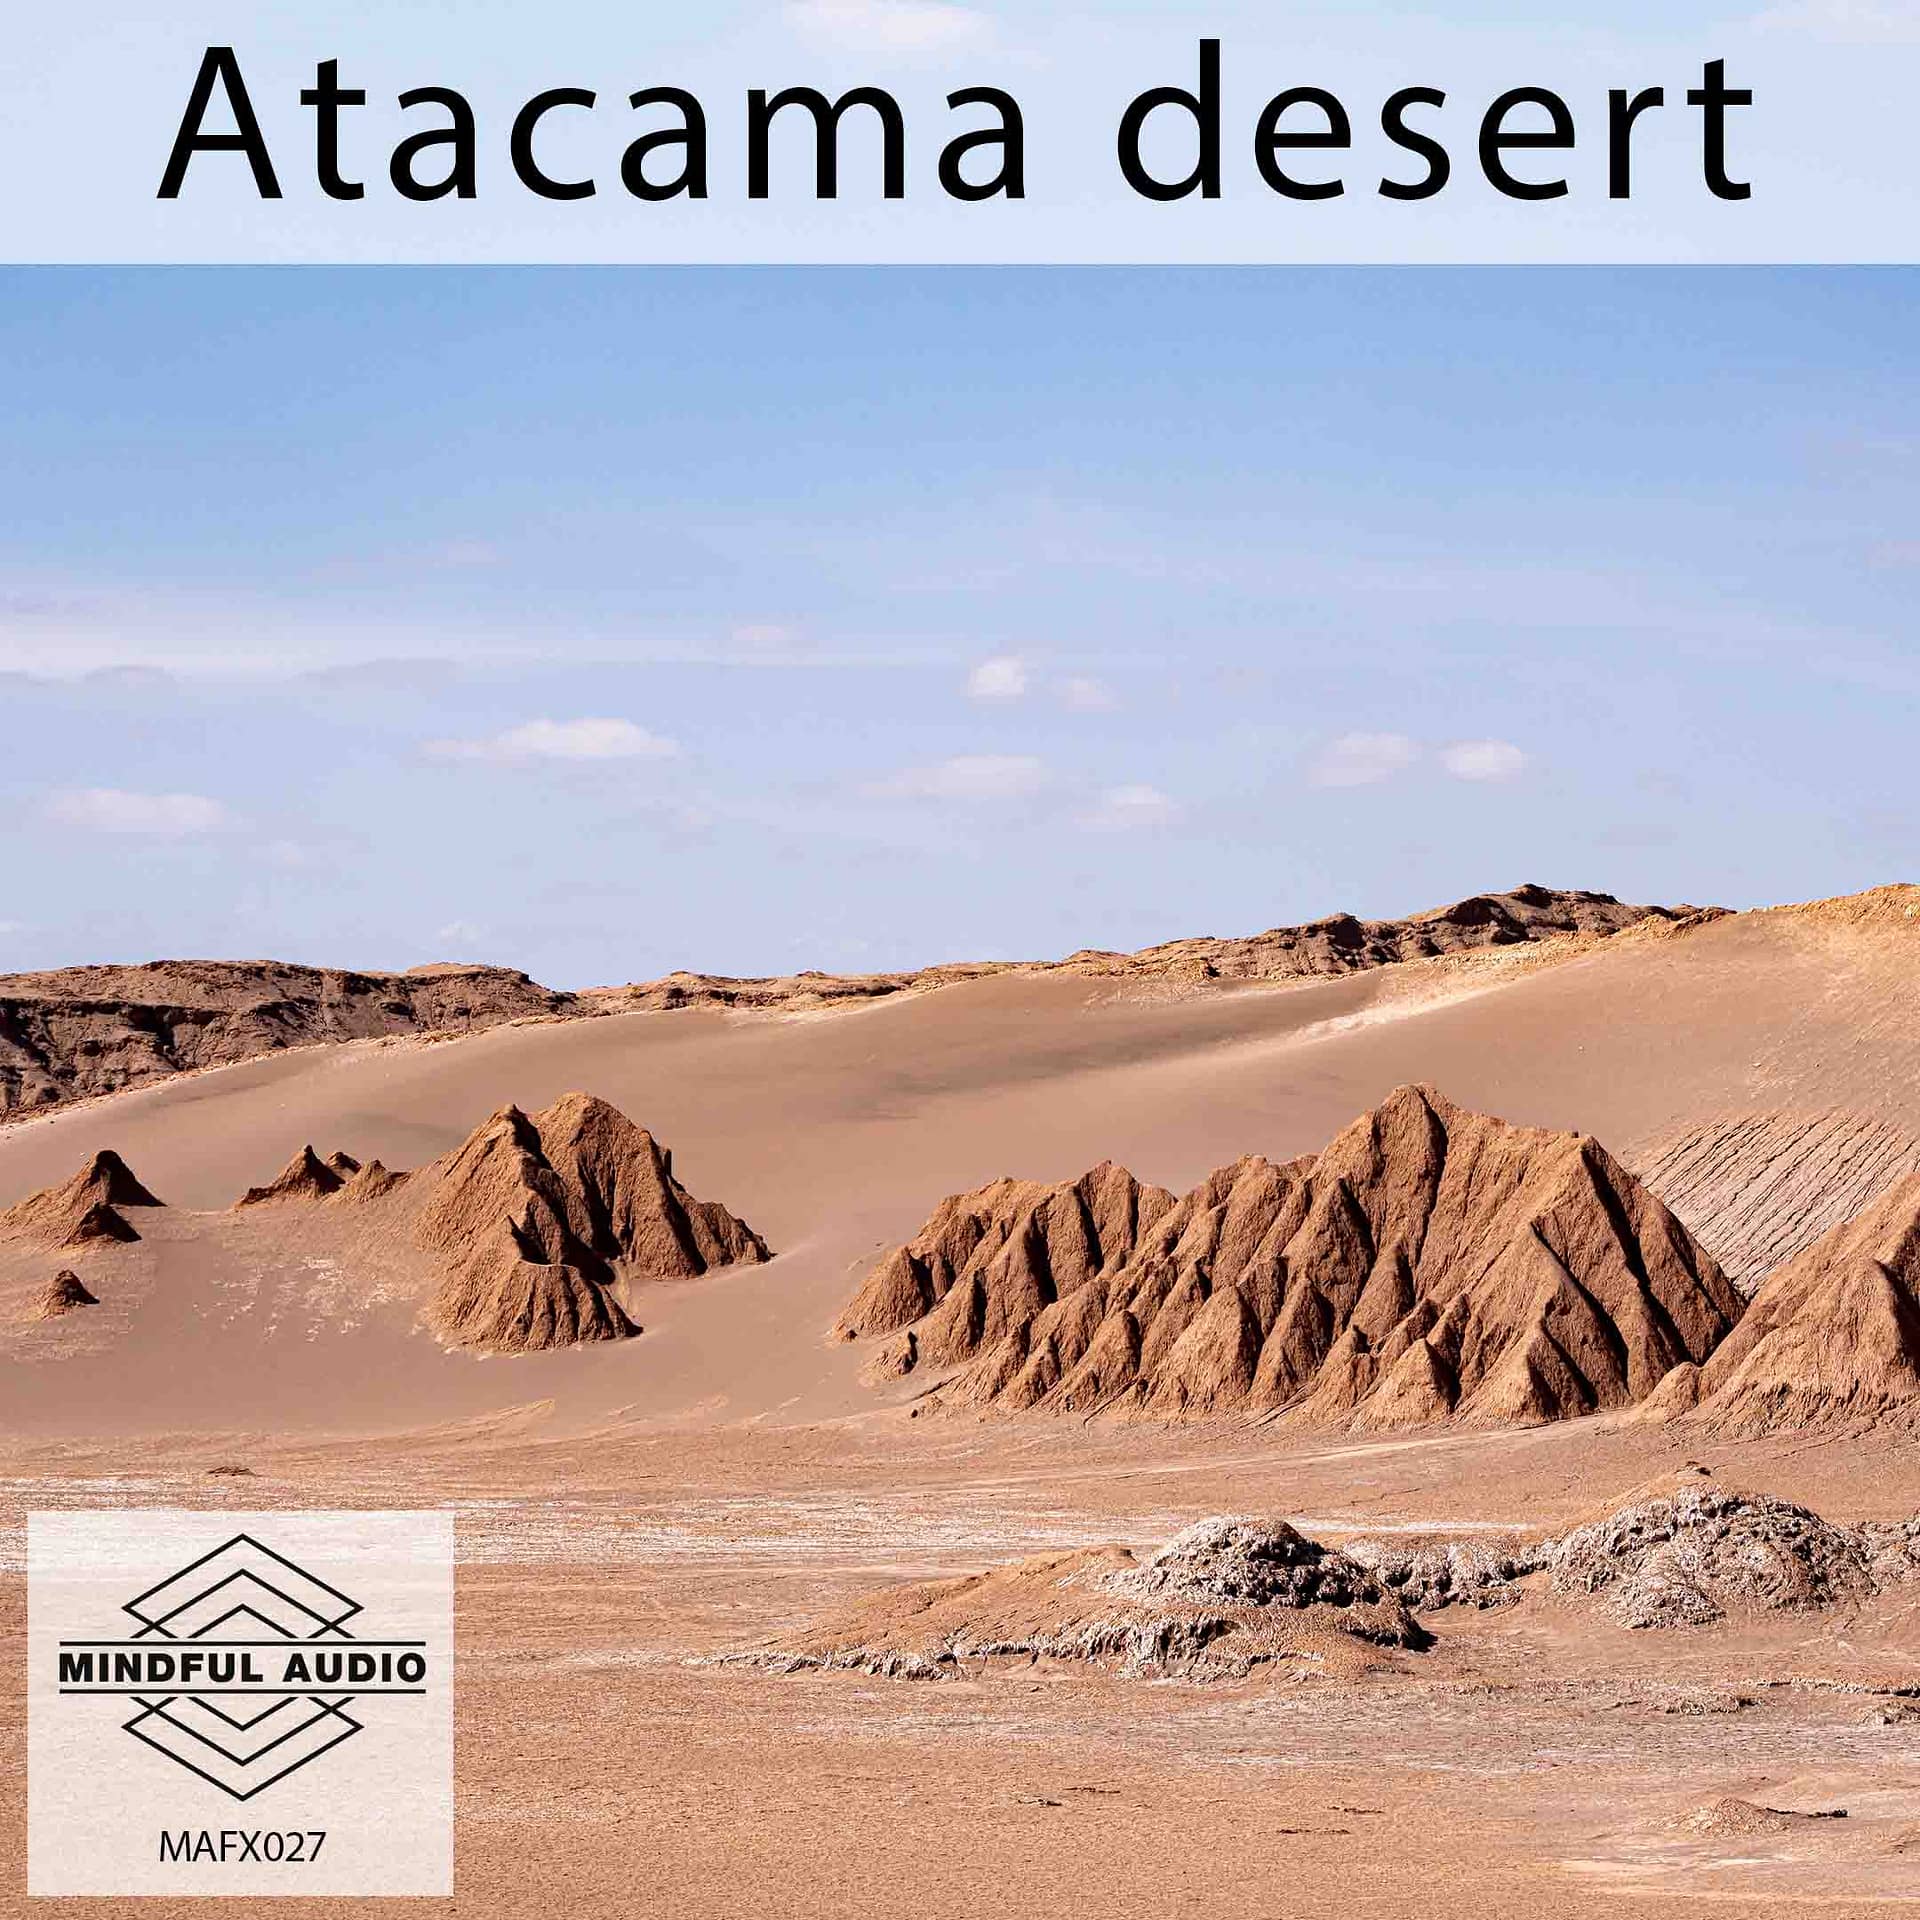 MAFX027 Atacama Desert cover low